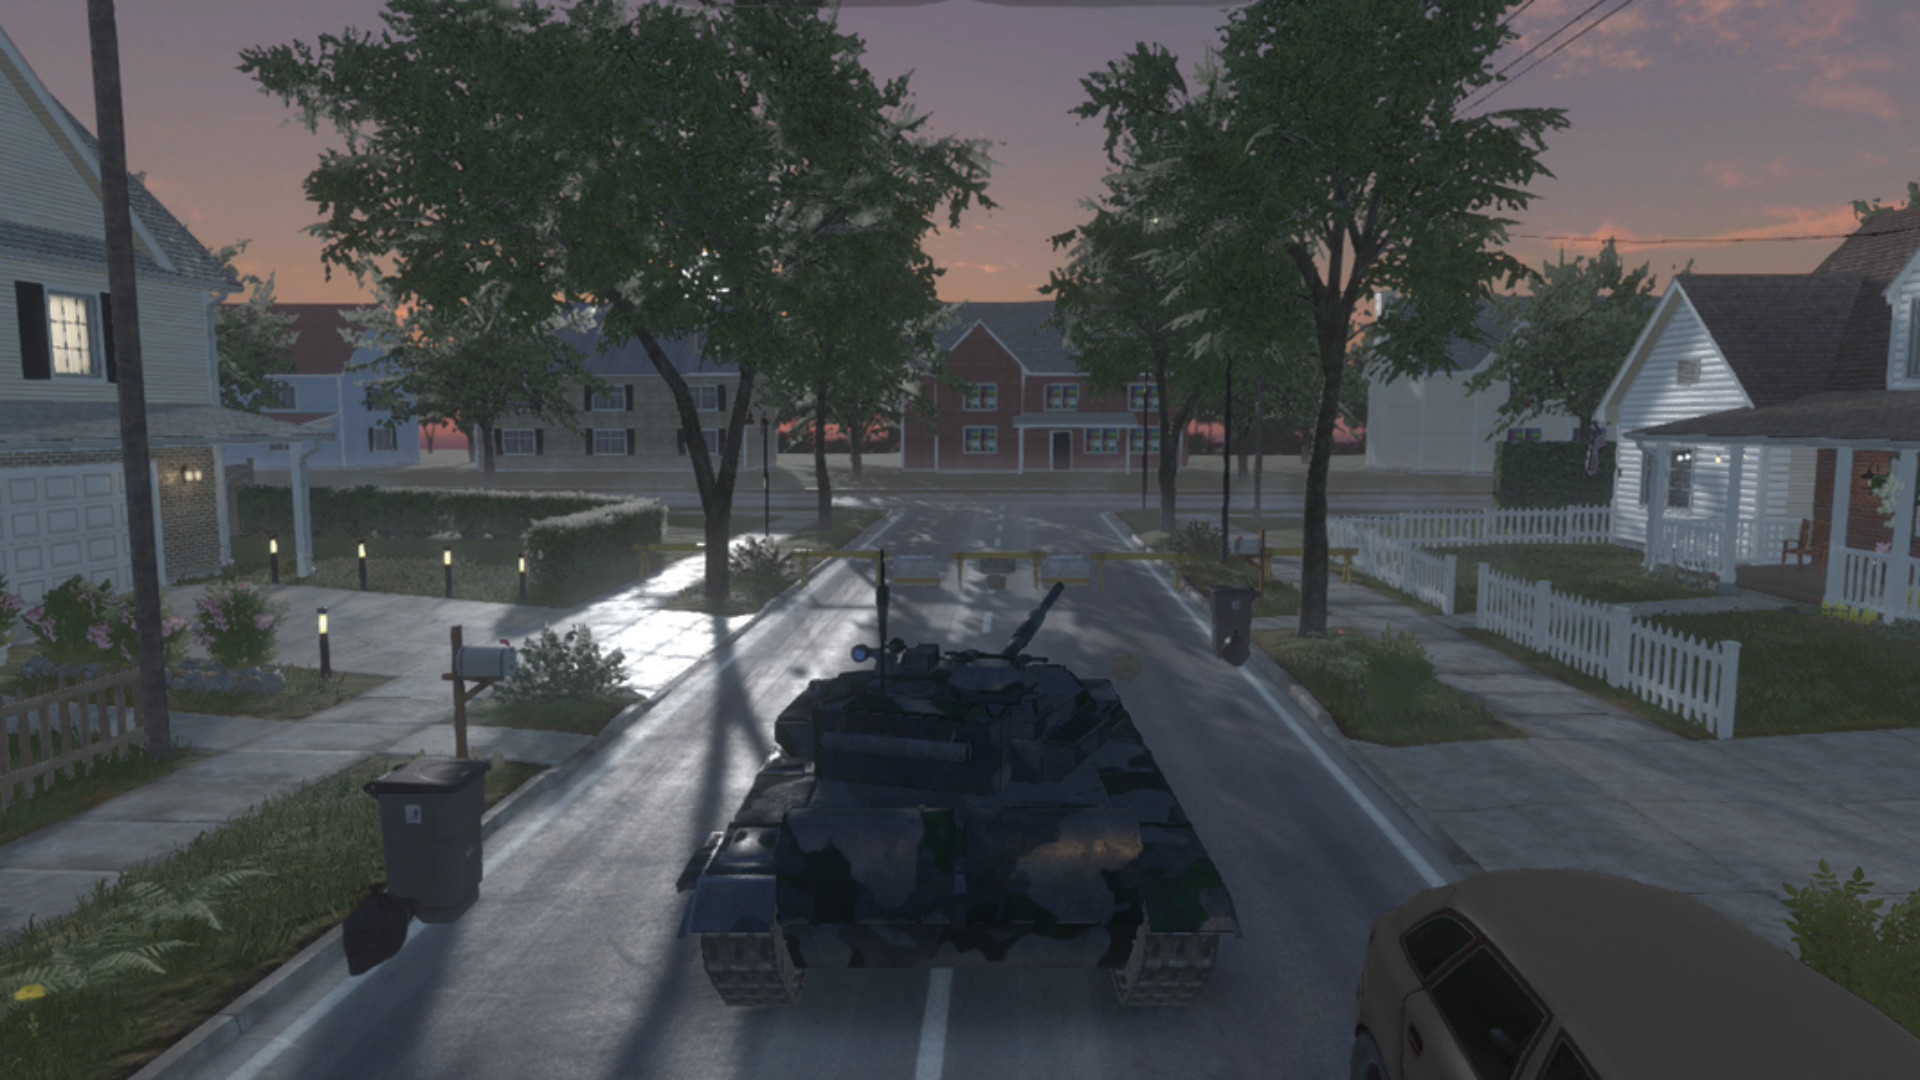 Tank Off screenshot